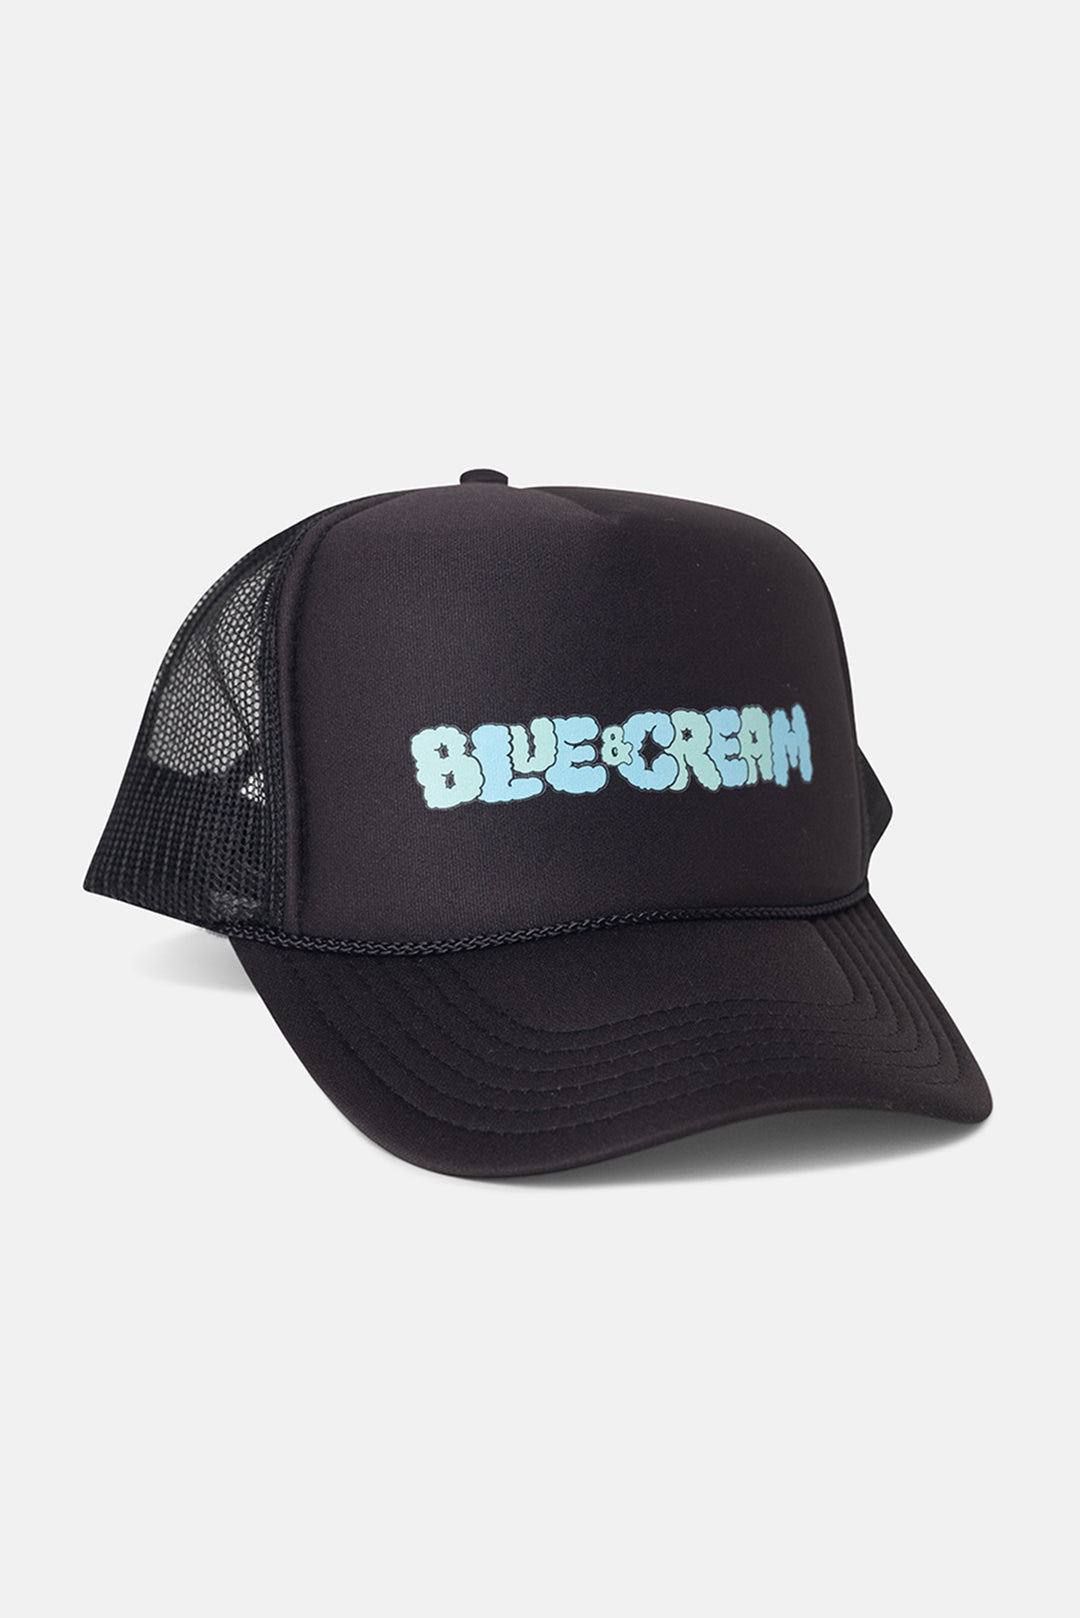 B&C Bubble Logo Mesh Trucker Hat Black